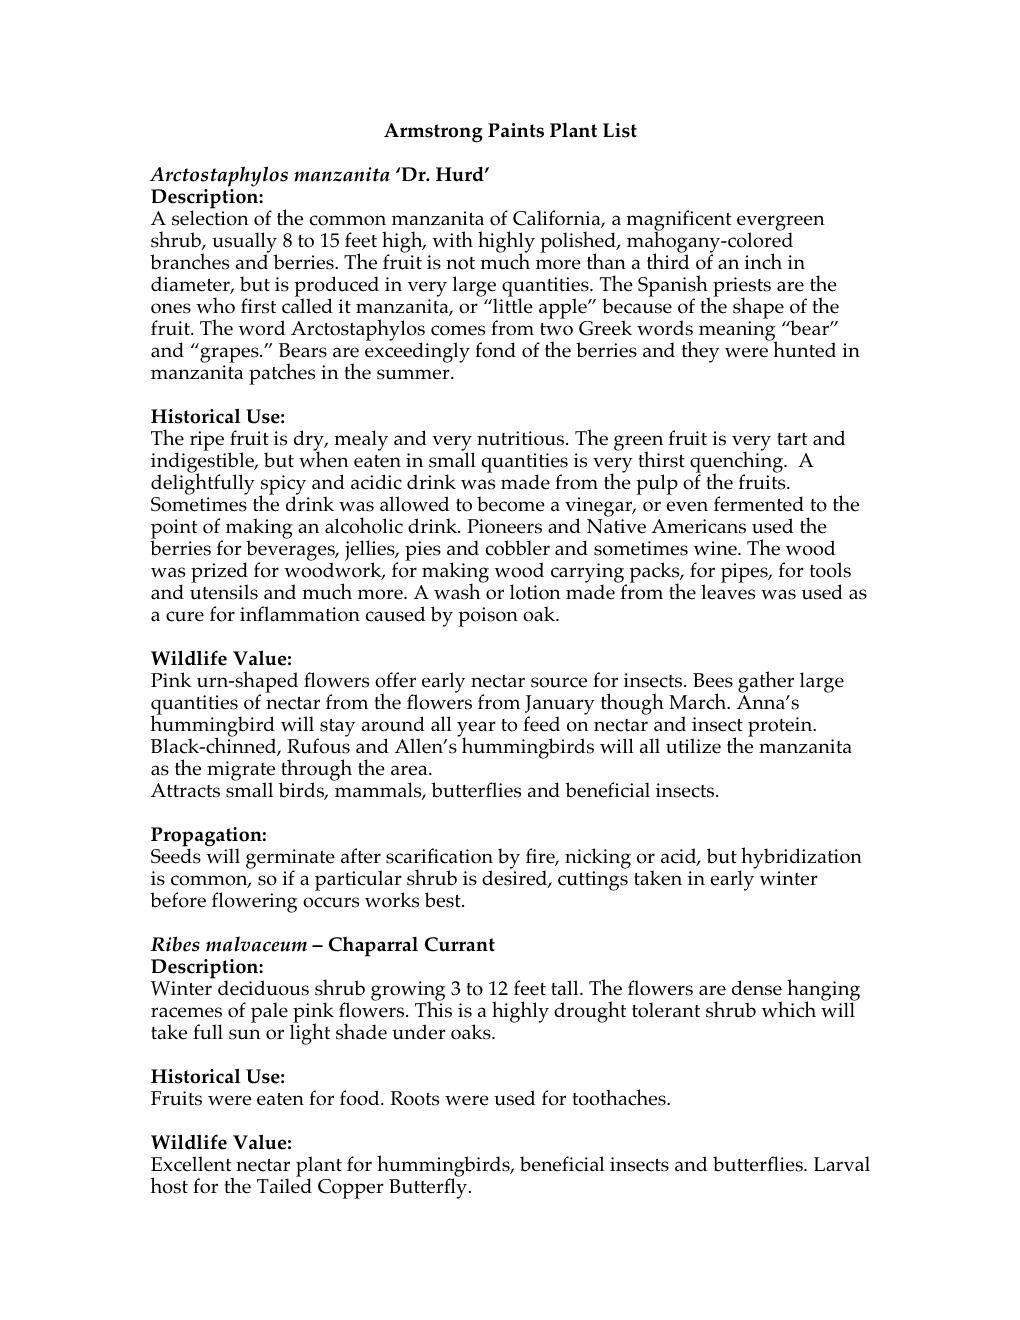 Armstrong Paints Plant List Arctostaphylos Manzanita 'Dr. Hurd' Description: a Selection of the Common Manzanita of Californ